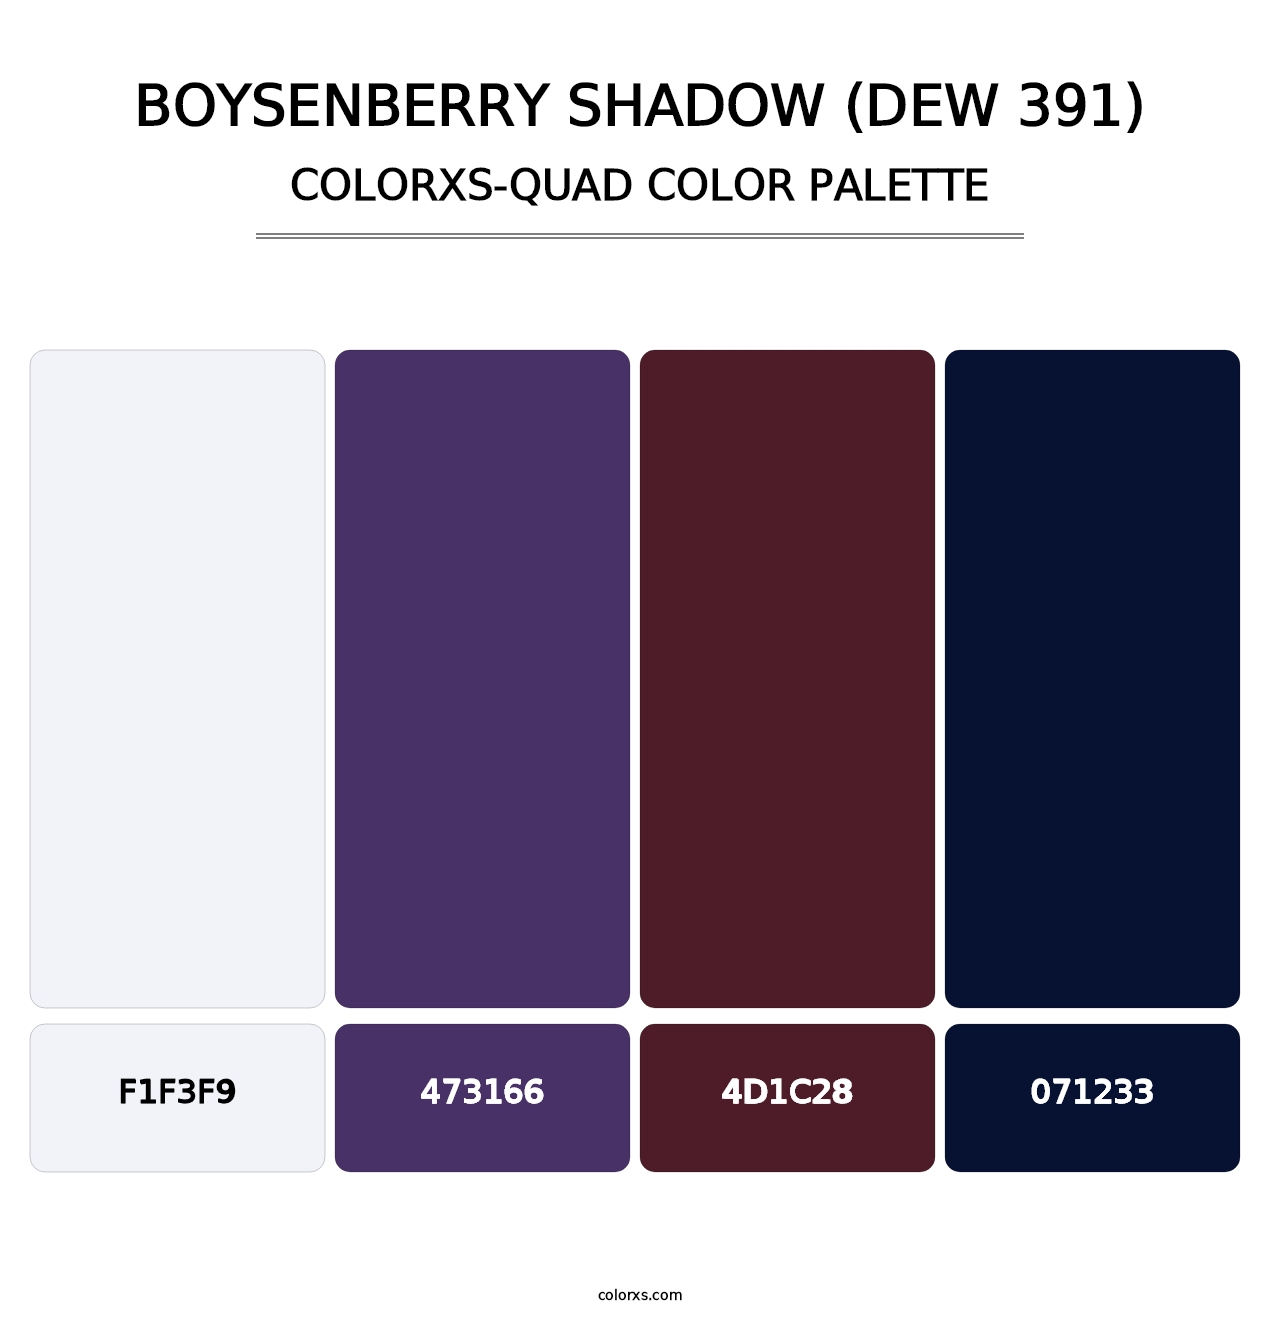 Boysenberry Shadow (DEW 391) - Colorxs Quad Palette